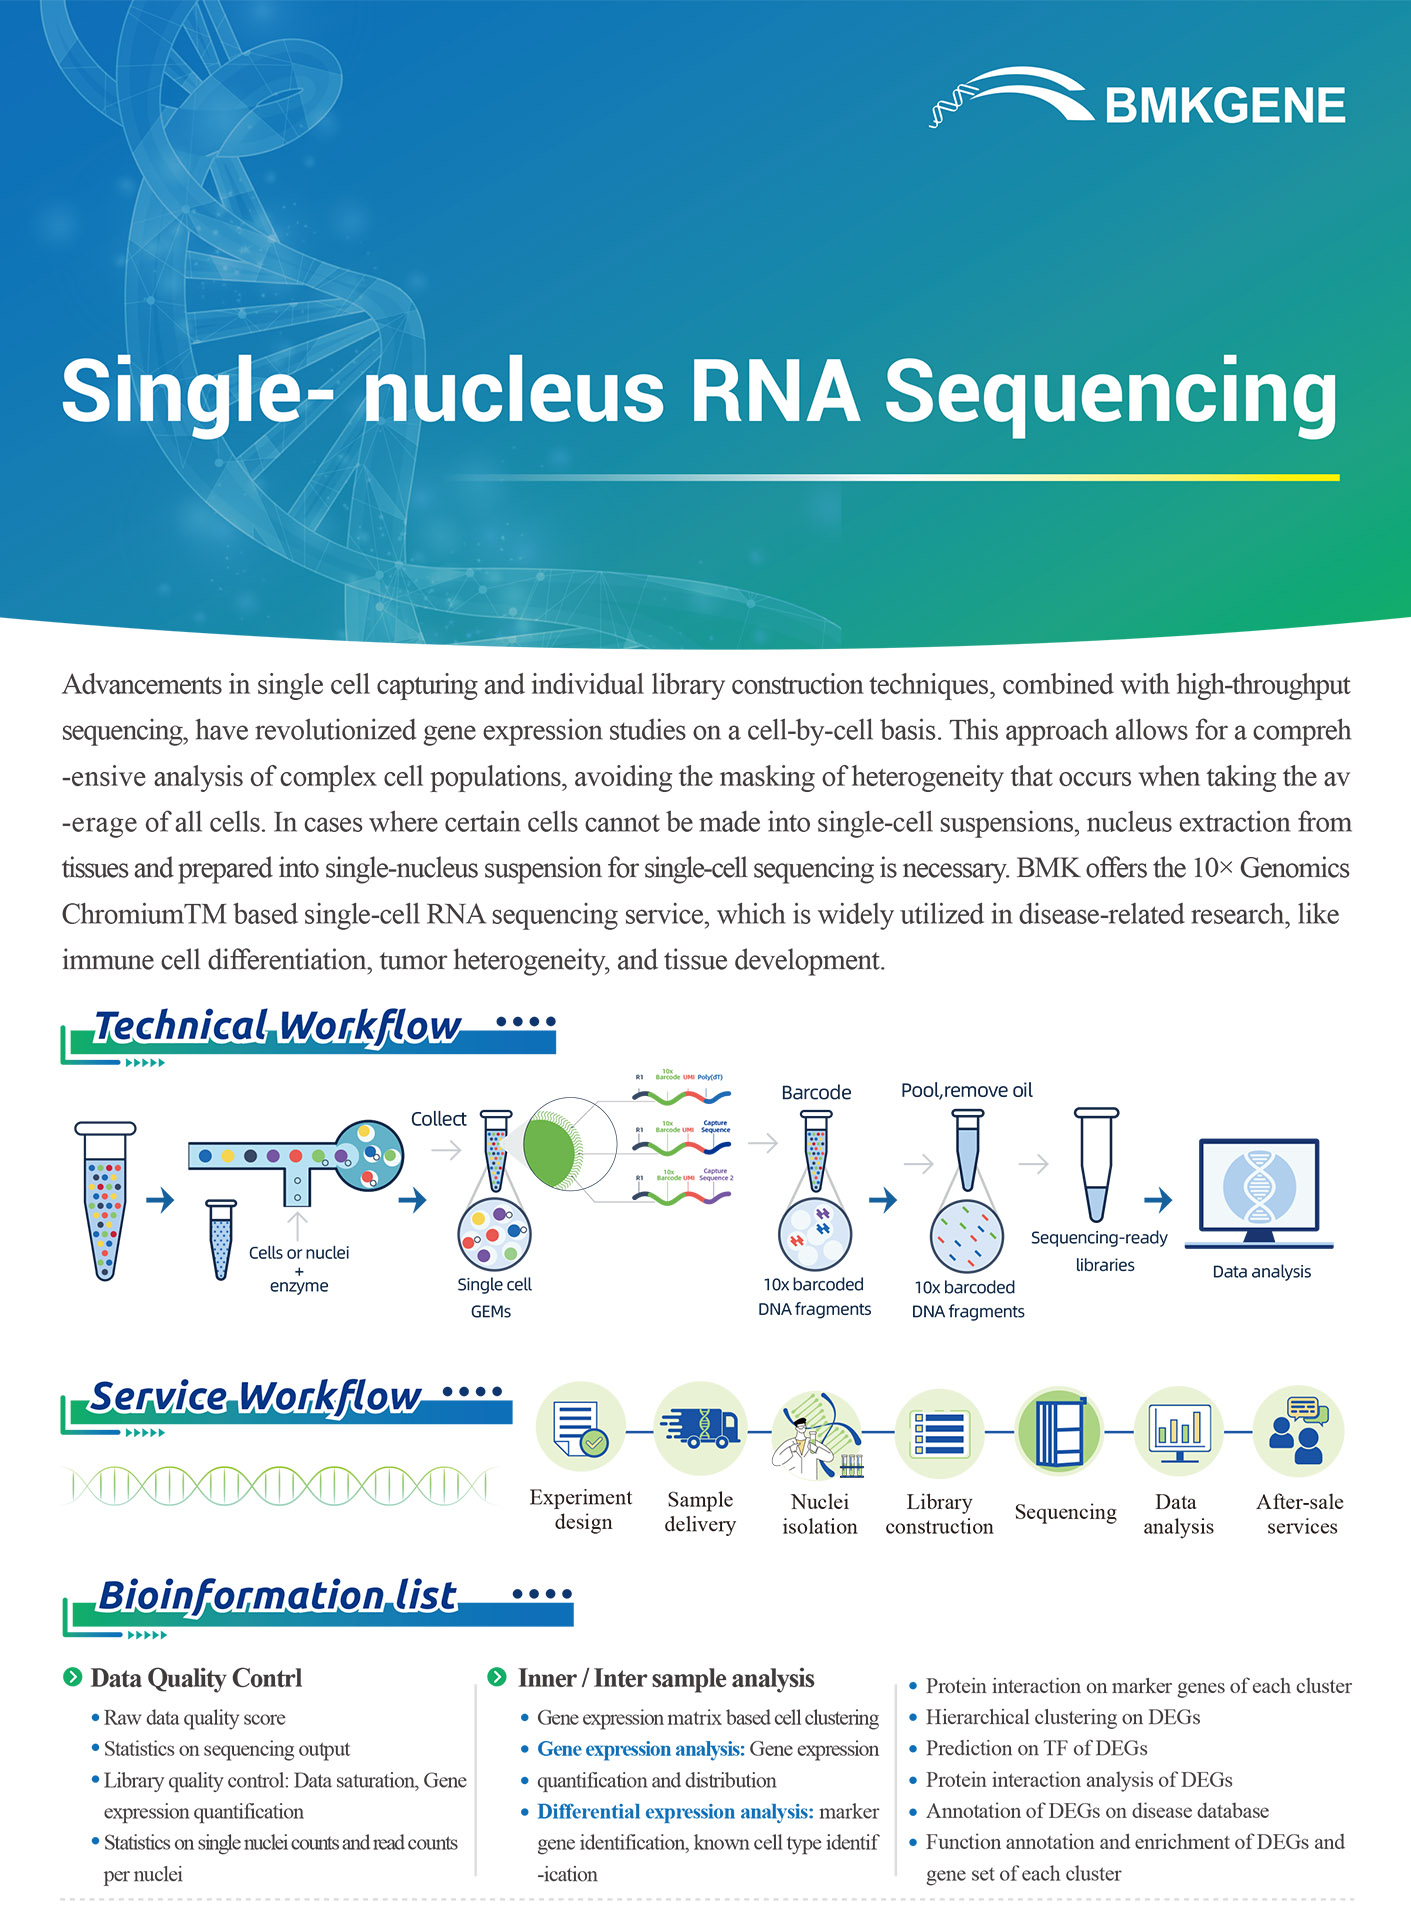 http://www.bmkgene.com/uploads/Single-nucleus-RNA-Sequencing-BMKGENE-2310.pdf